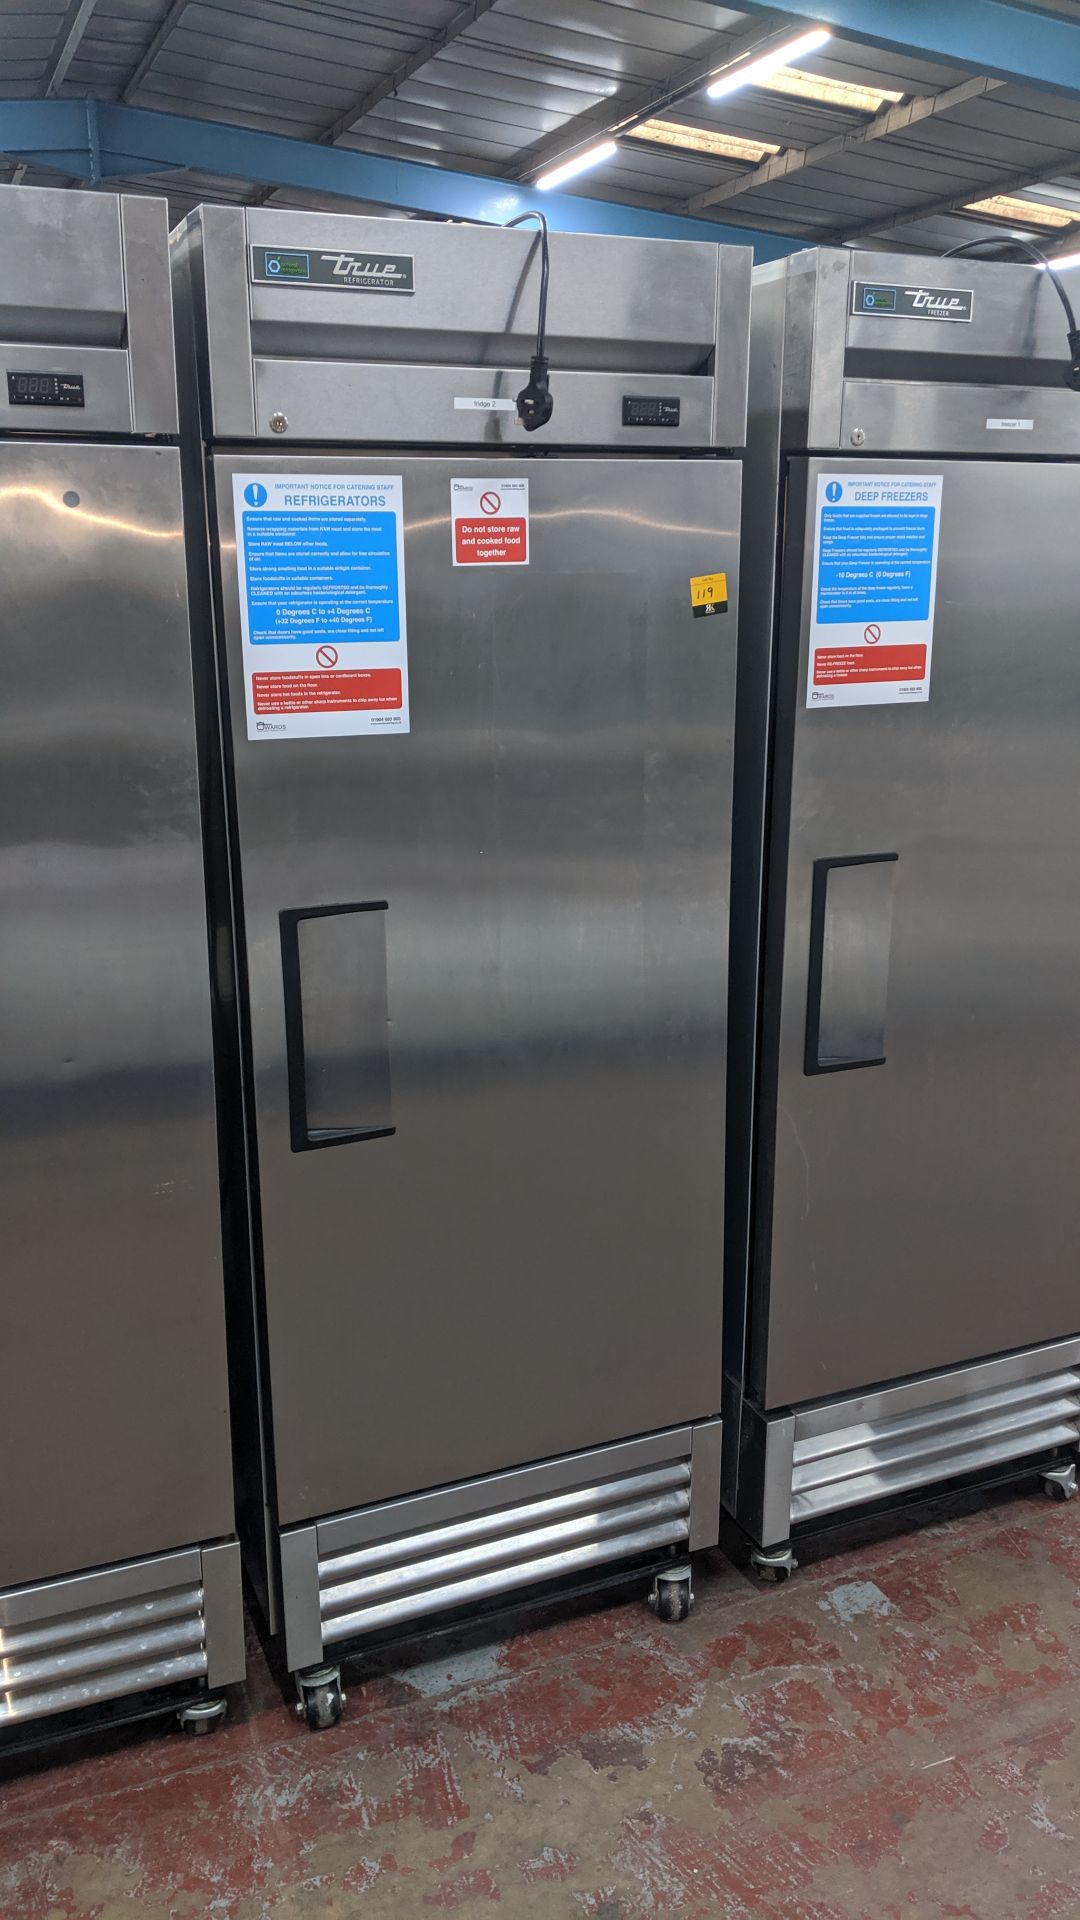 2018 True Refrigeration model T19E stainless steel mobile upright fridge. Cost price ï¿½1,150 plus